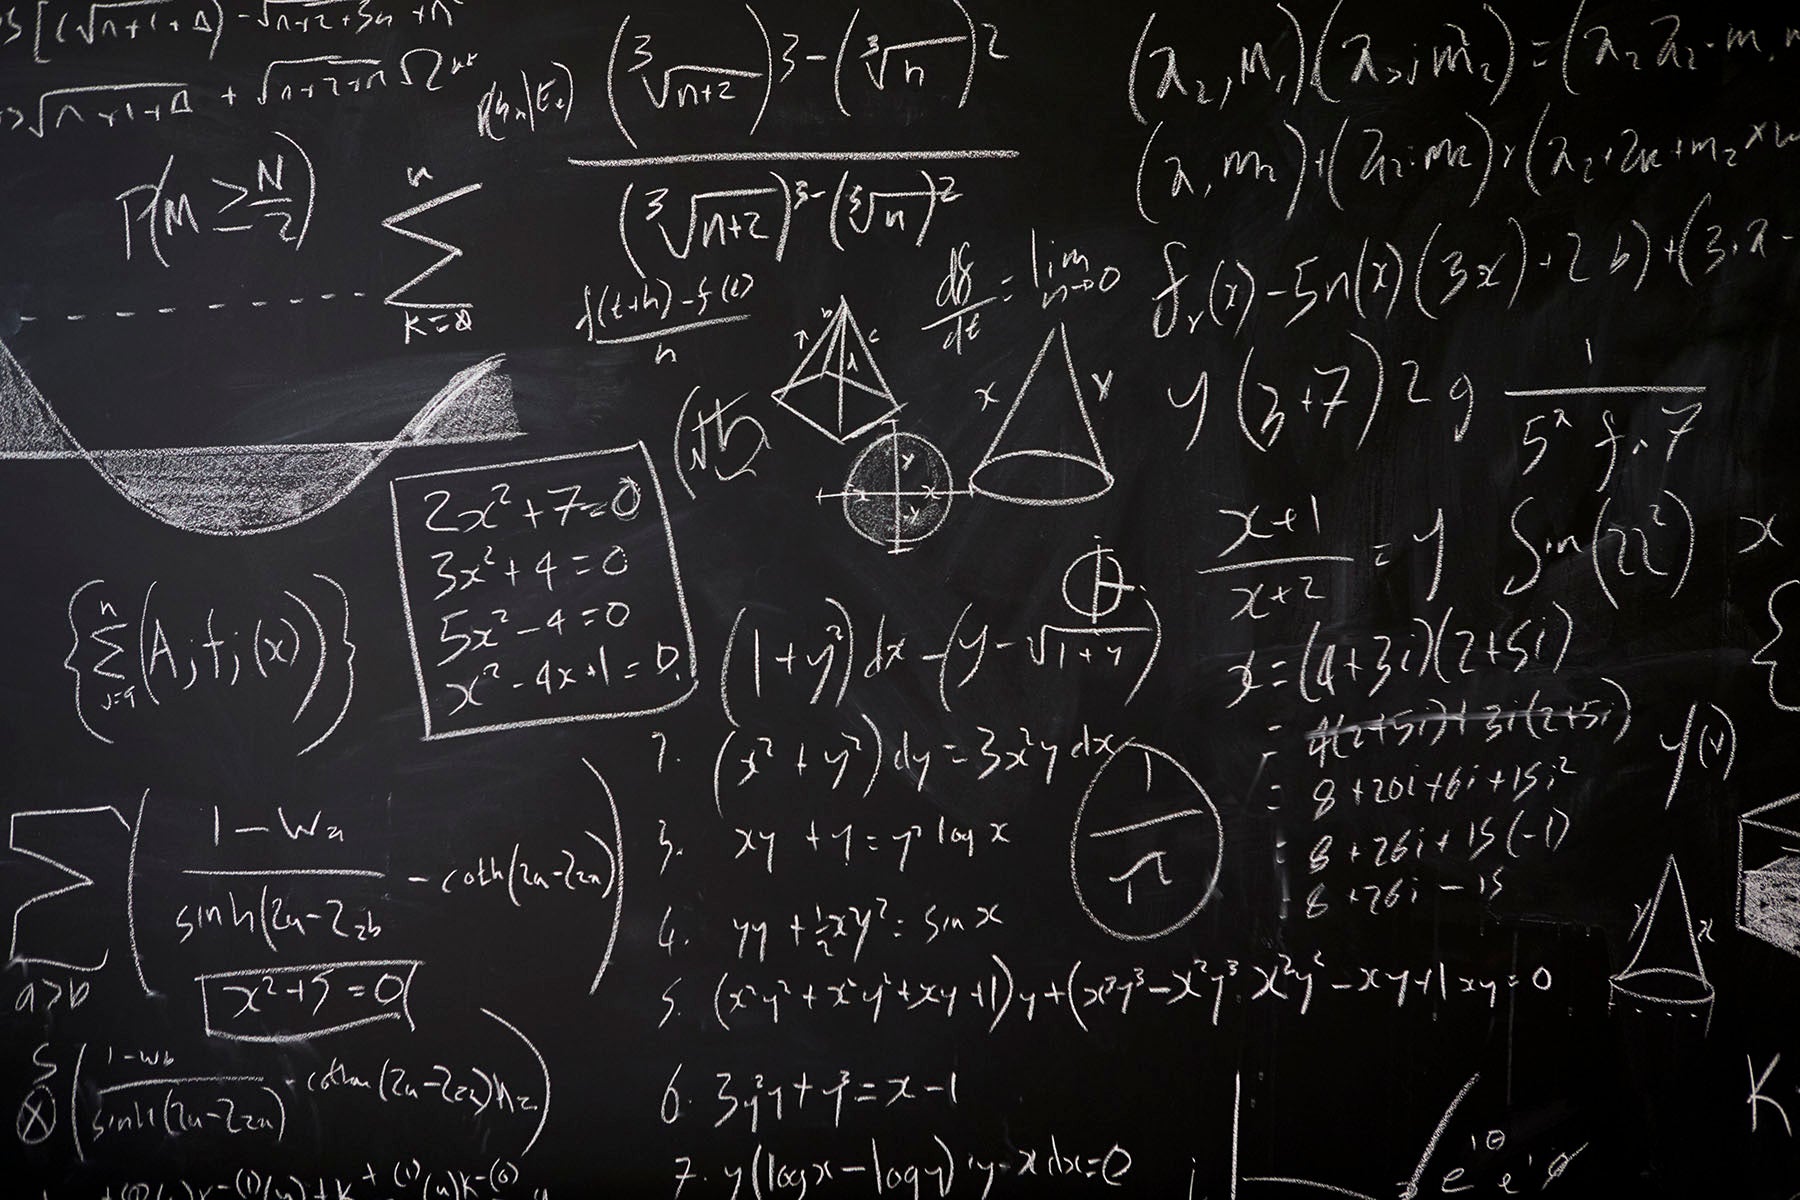 blackboard-with-maths-statistics-equations-and-id-2021-08-26-16-13-37-utc.jpg